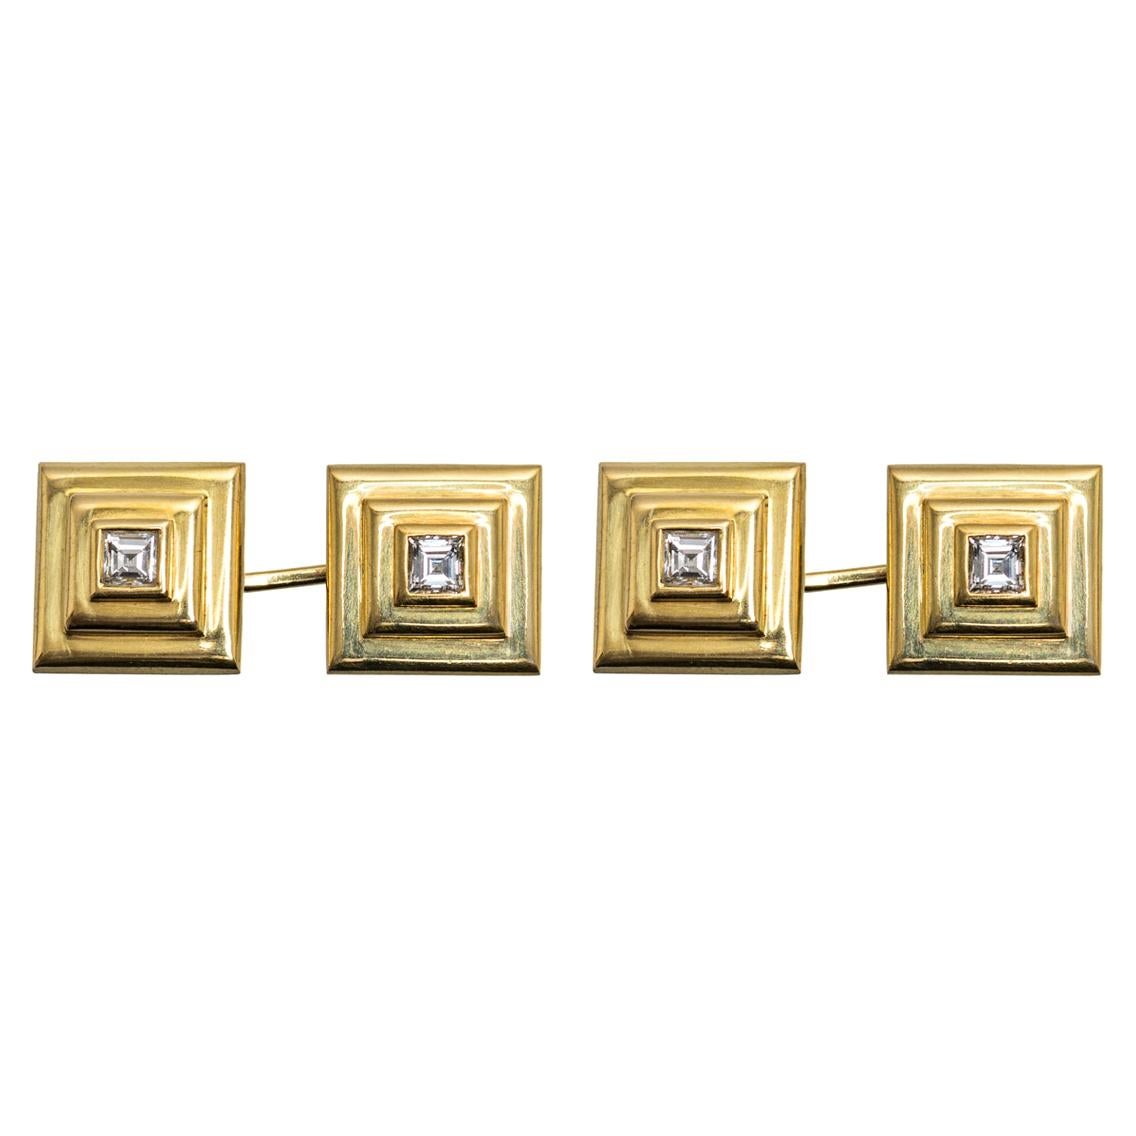 Cartier Cufflinks Stepped Design in 18 Karat Gold and Diamond, French circa 1960